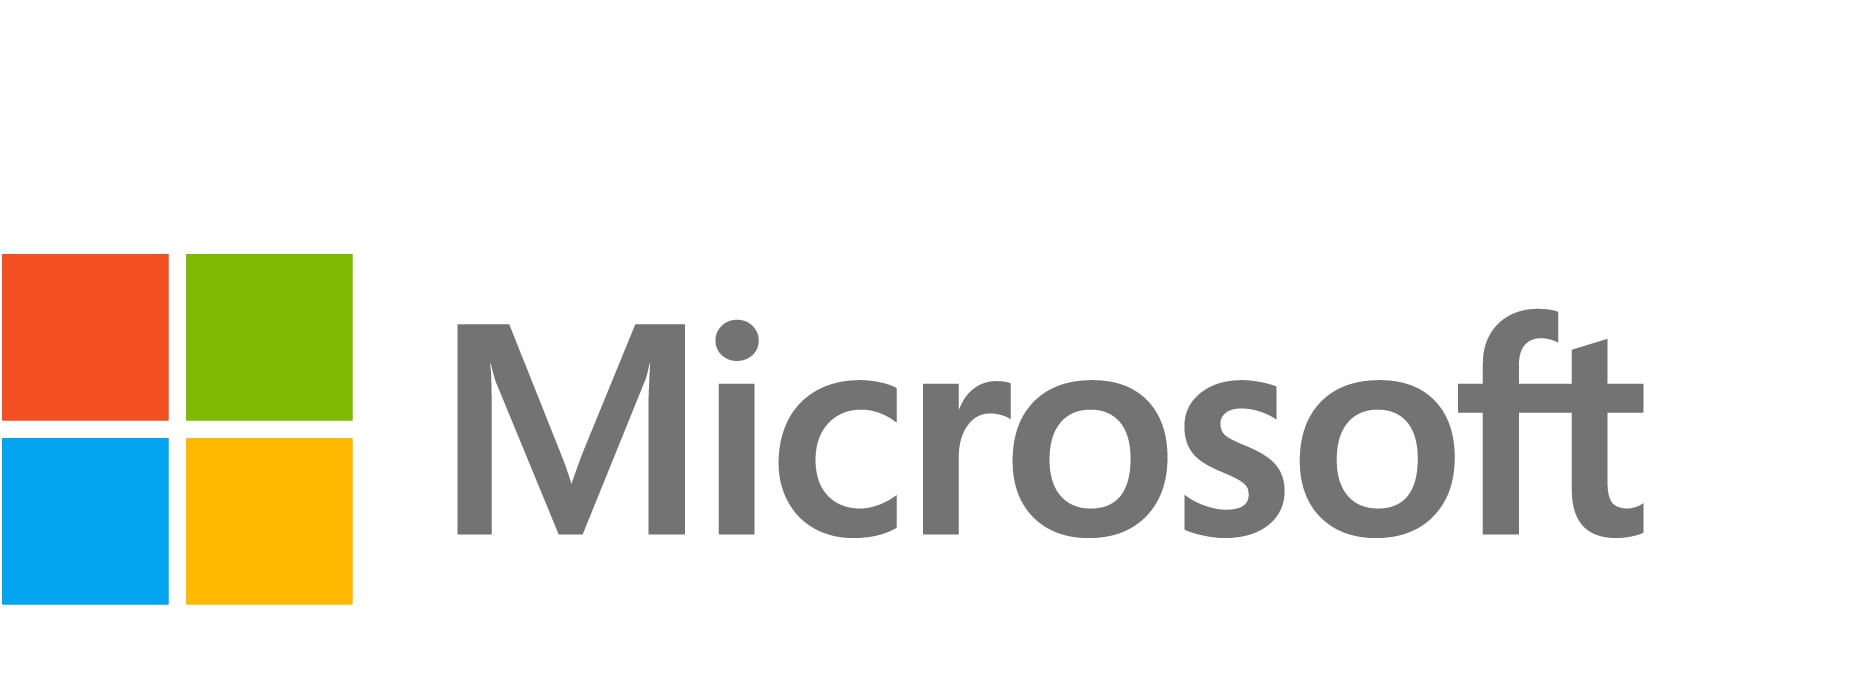 Microsoft Defender for Endpoint Server - subscription license - 1 license